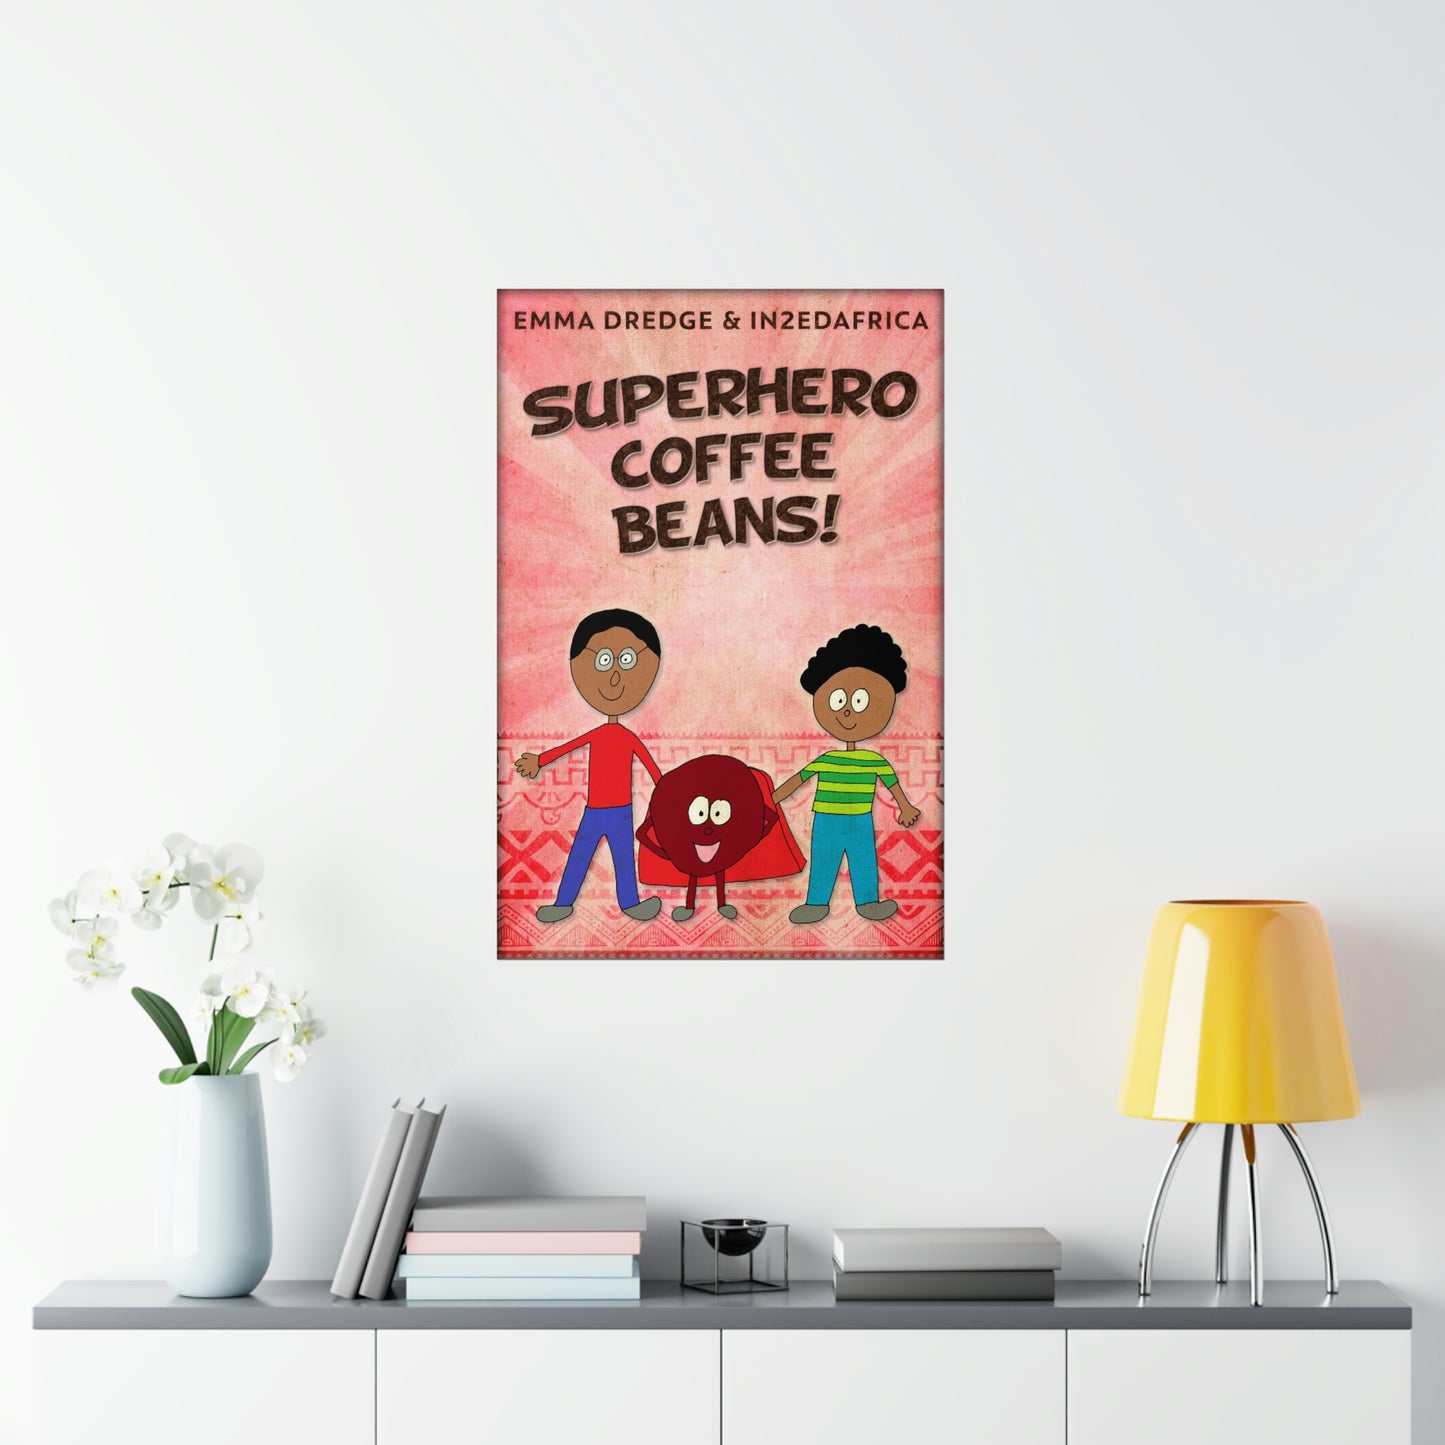 Superhero Coffee Beans! - Matte Poster